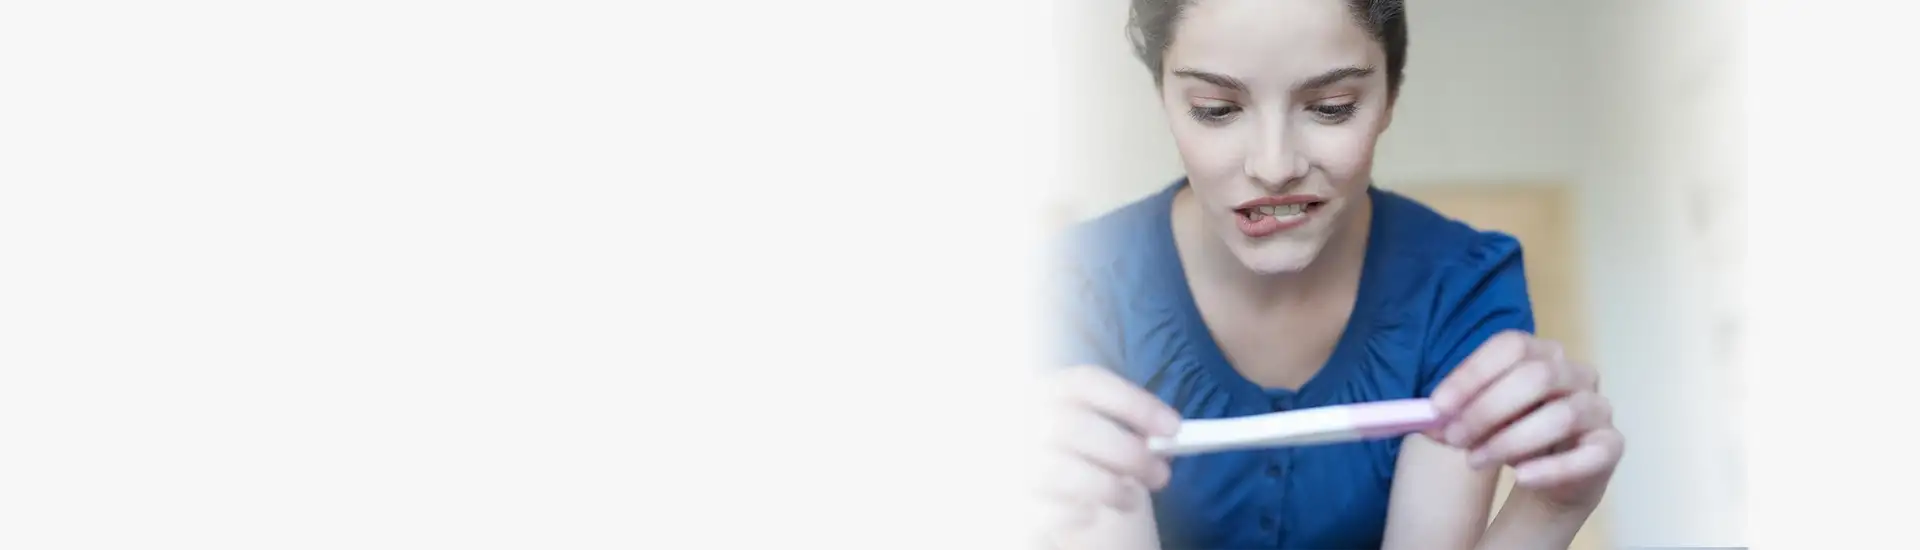 Anxious woman looking at pregnancy test - Pregnancy Help in Arizona